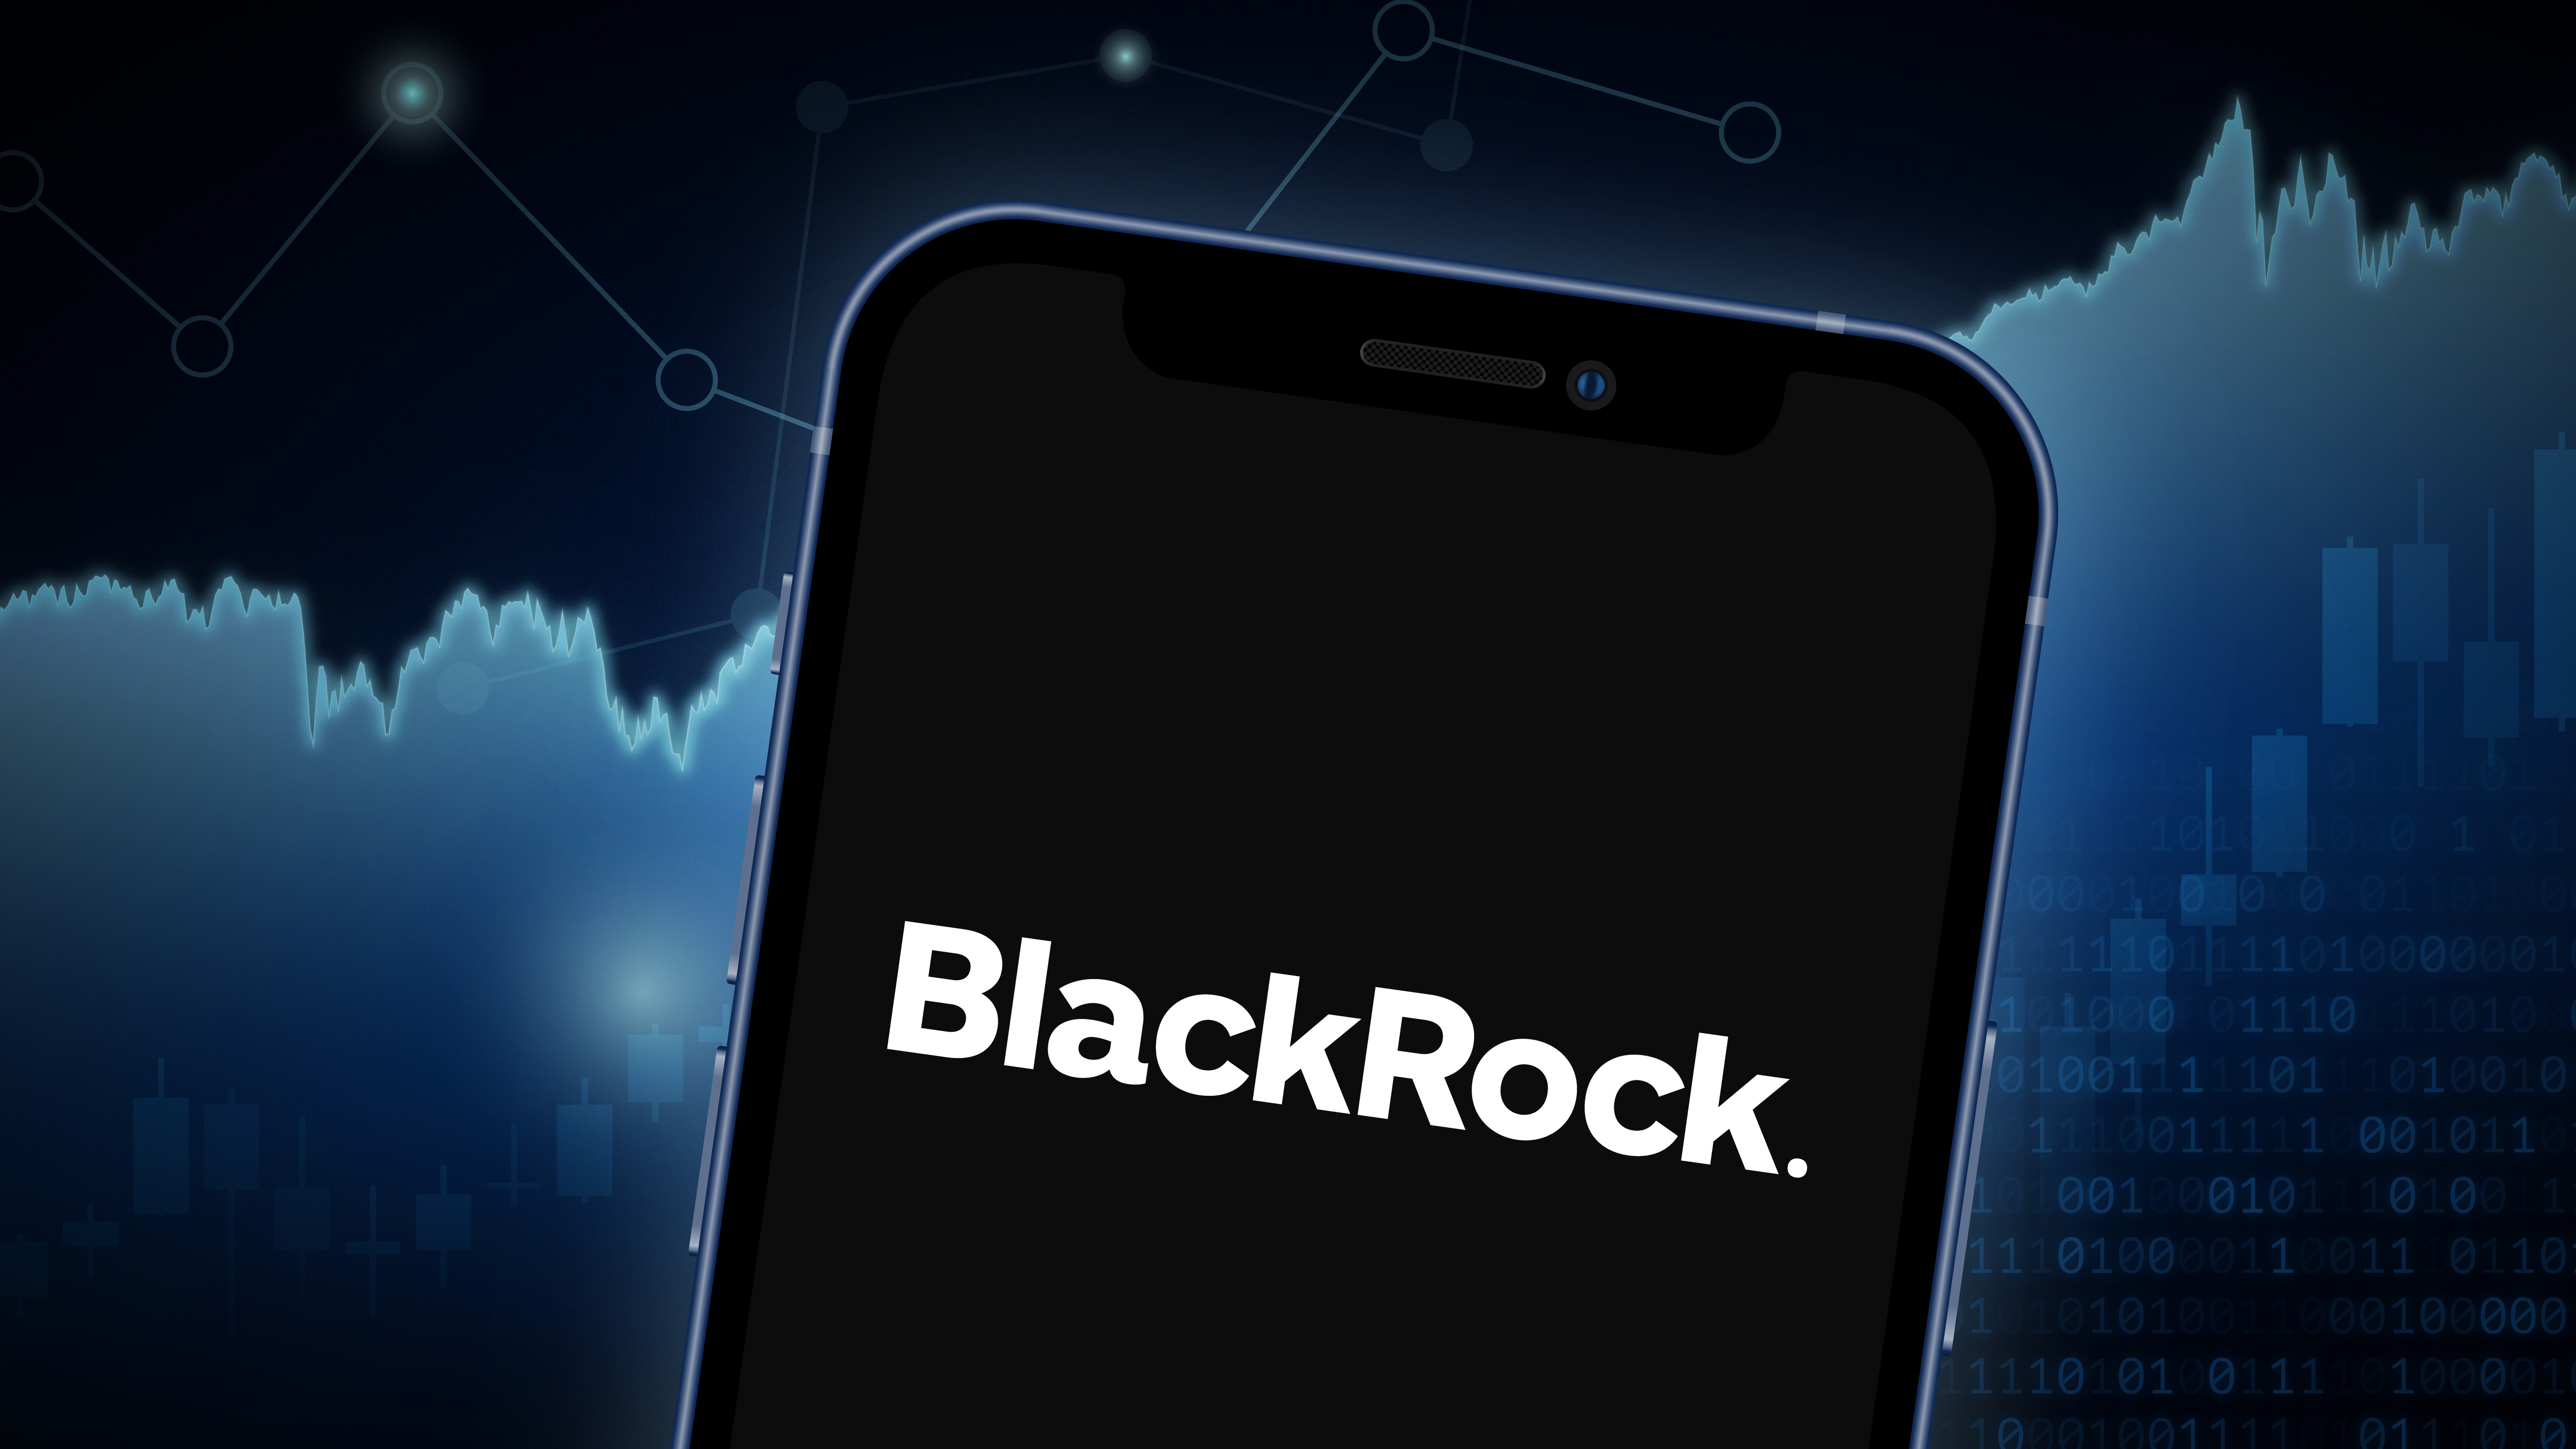 BlackRock stock market vector illustration, with iPhone splash s